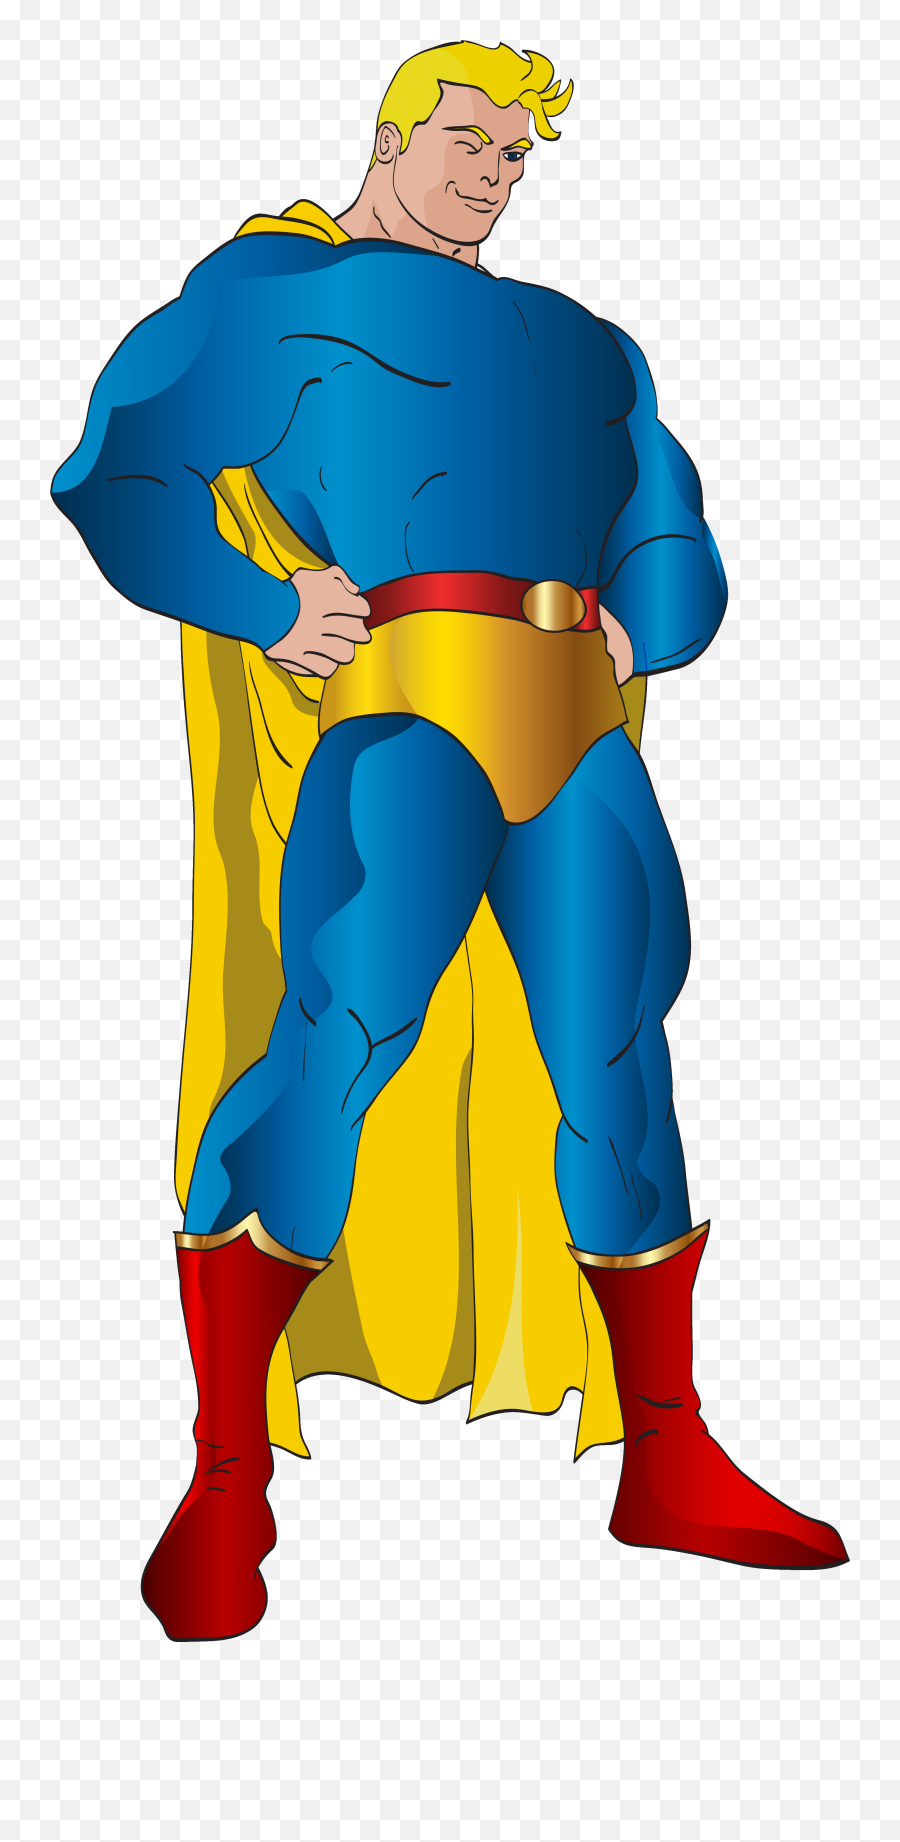 Png Clip Art Image - Cartoon Picture Of Superman,Superhero Png